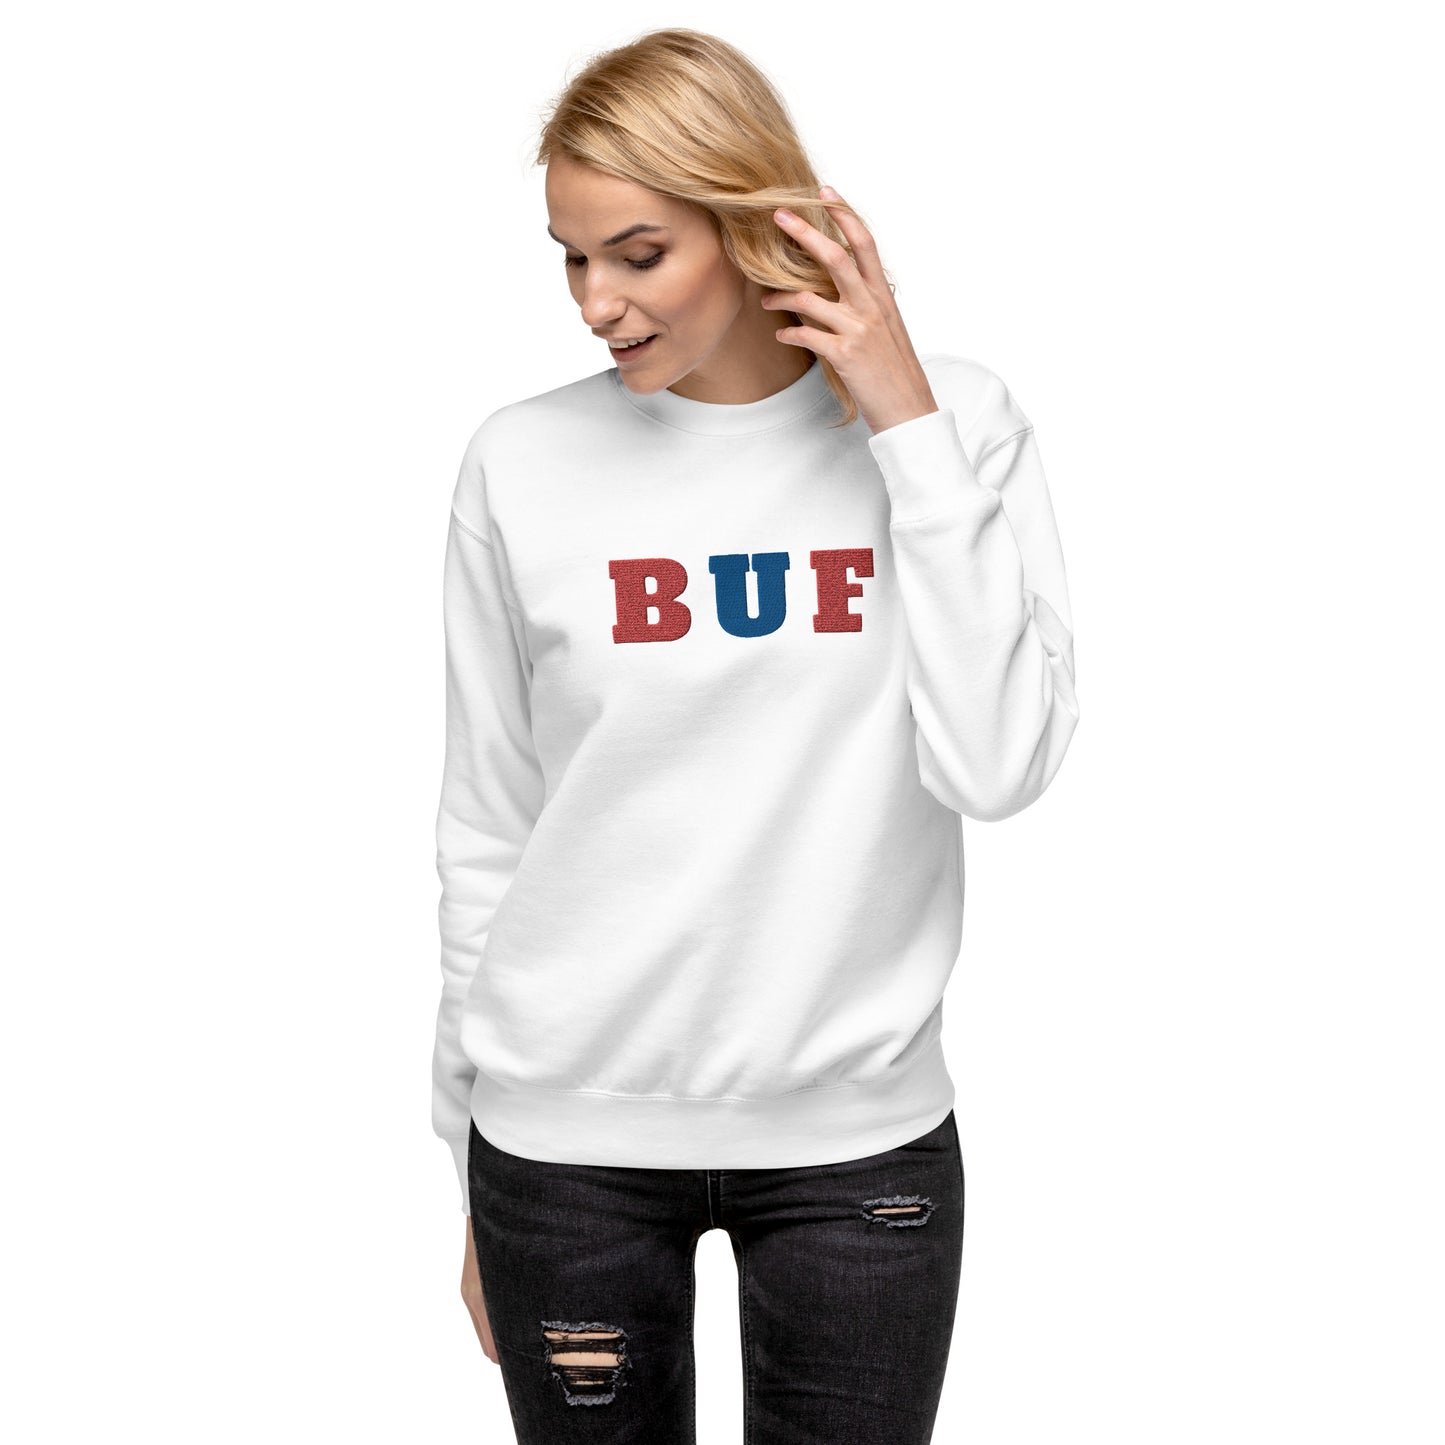 BUF Bills Premium Sweatshirt